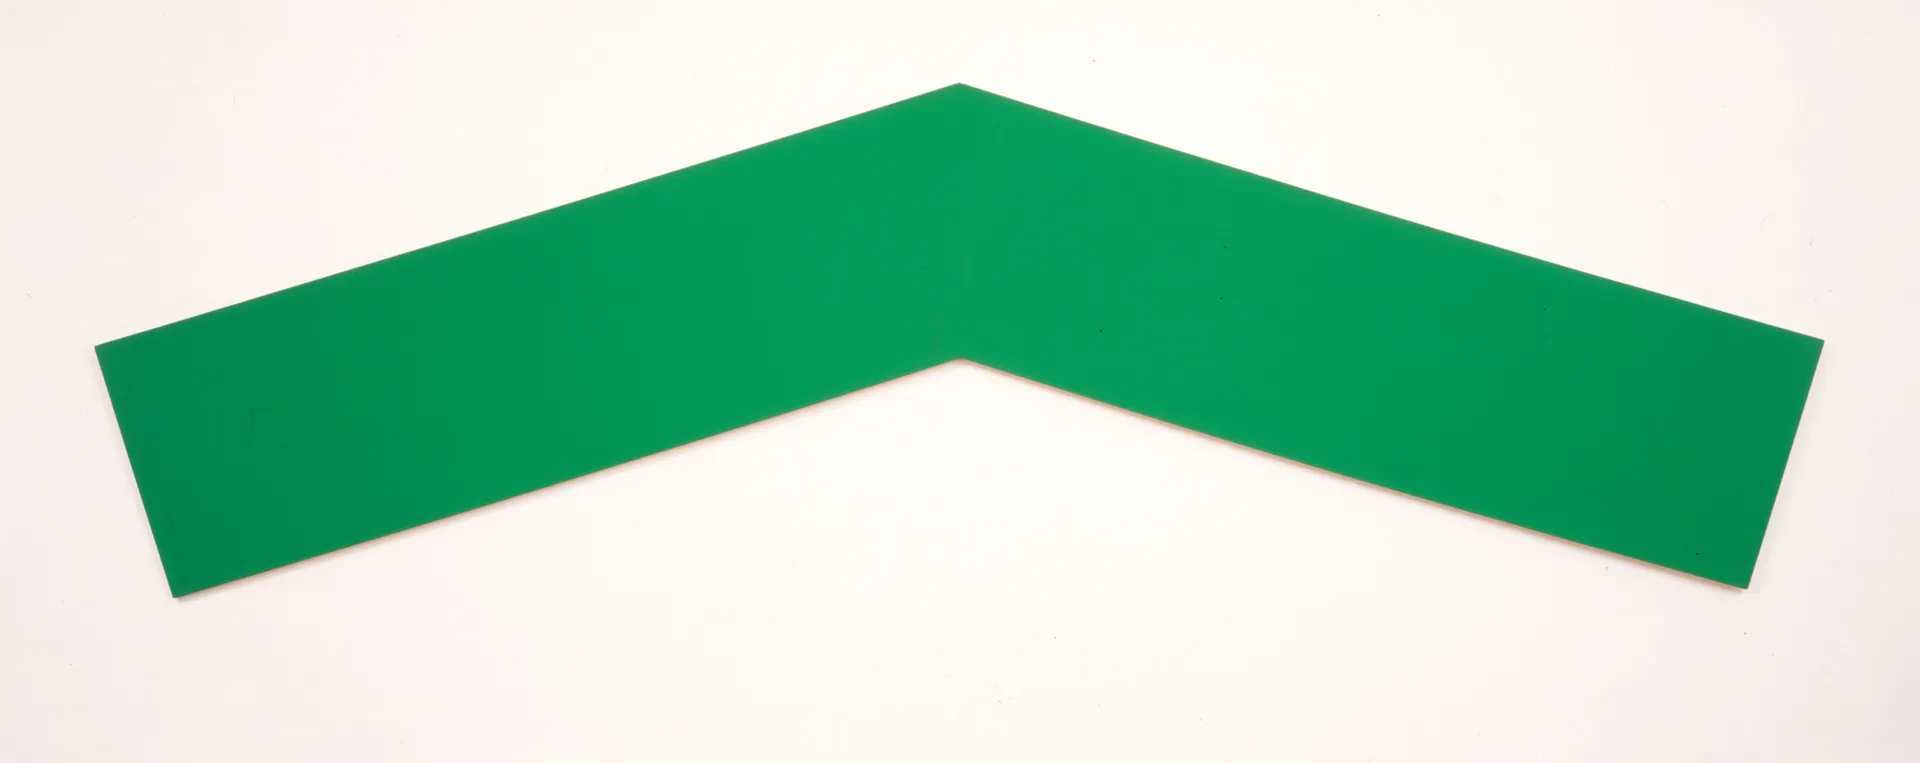 Ellsworth Kelly - Green Angle, 1970, oil on canvas